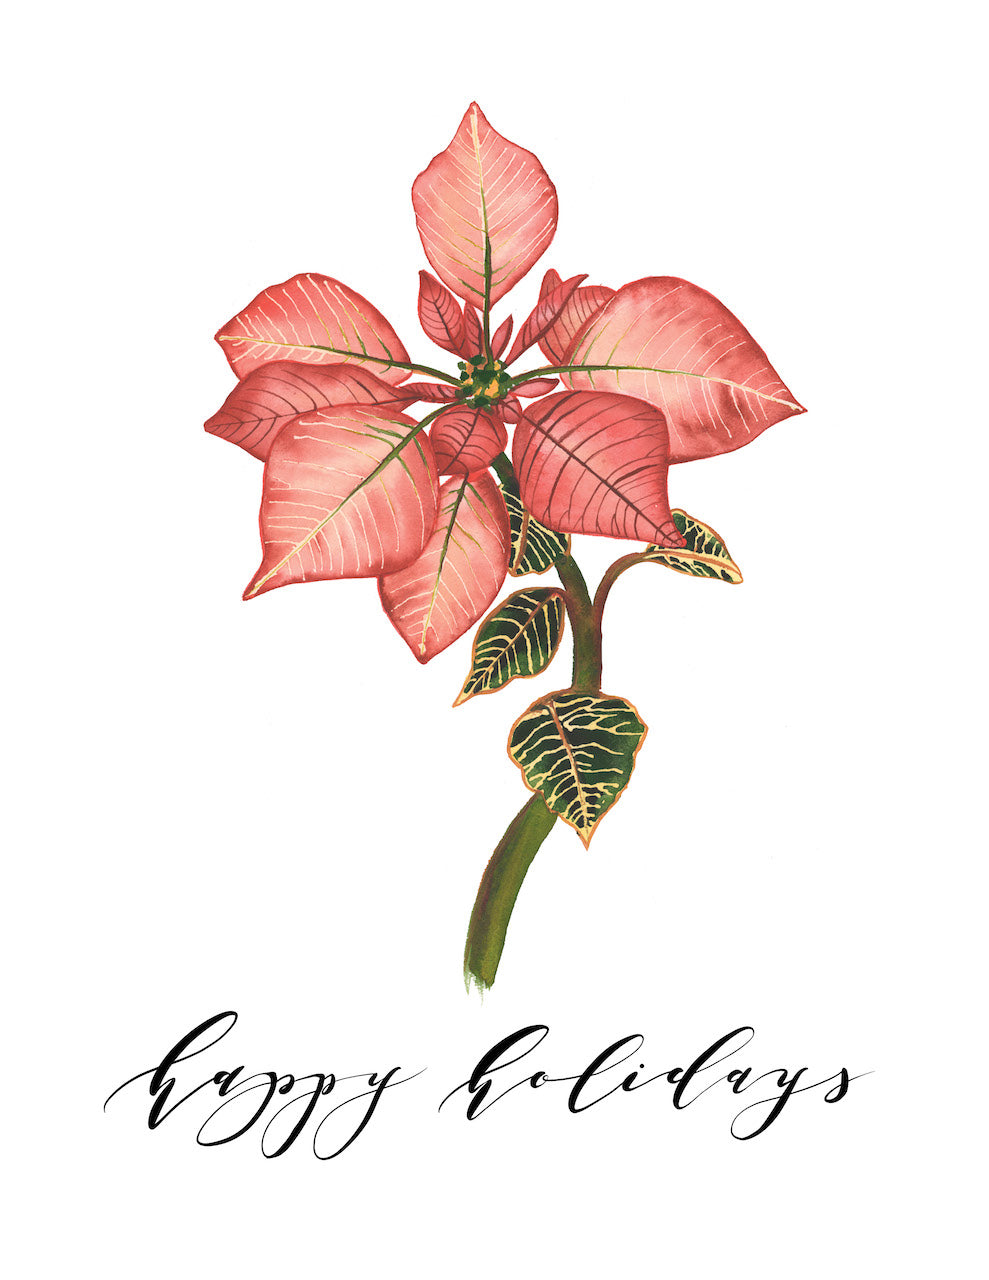 Poinsettia Holiday Card